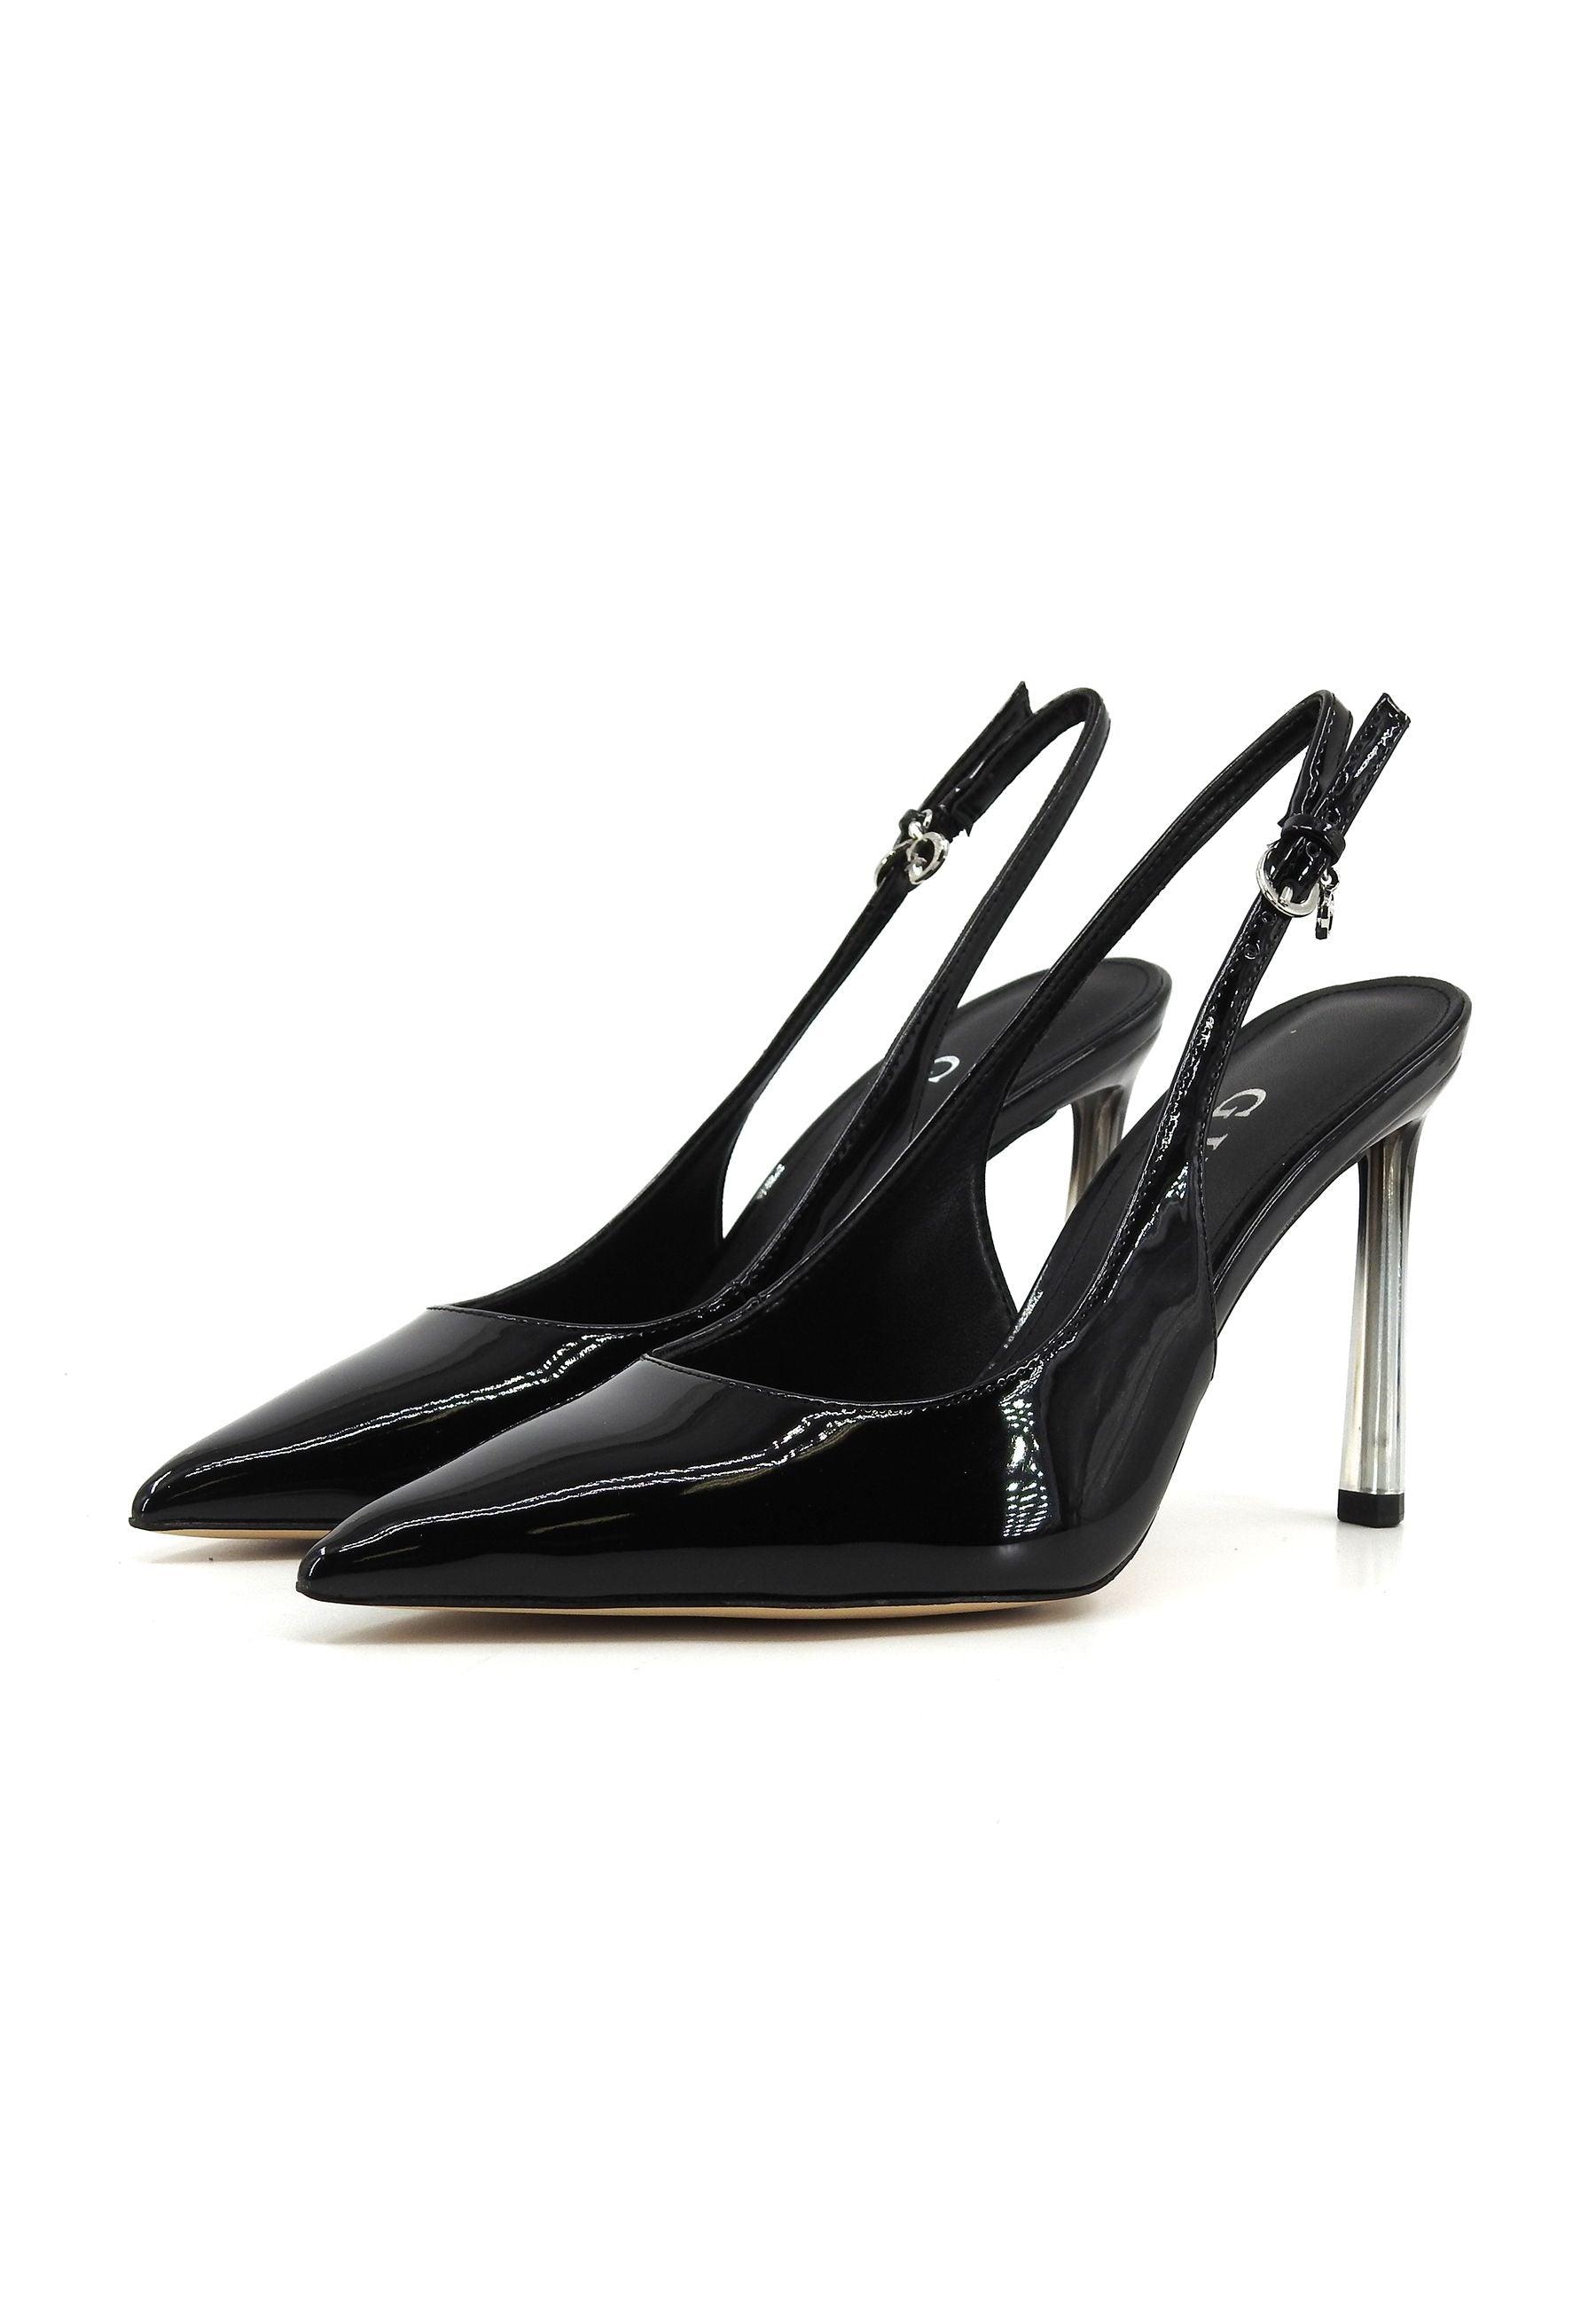 GUESS Sandalo Tacco Donna Black FLJSYDPAT05 - Sandrini Calzature e Abbigliamento